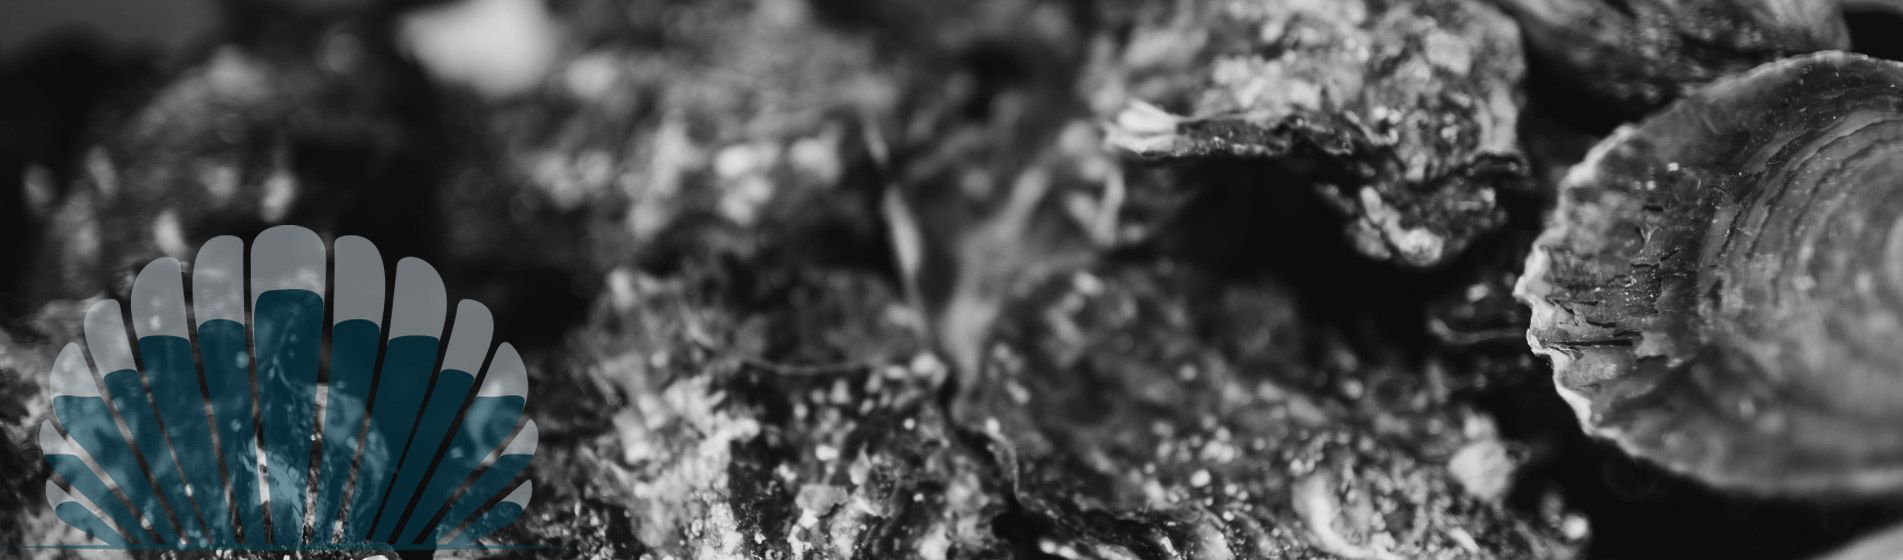 Degustation huitre proximite